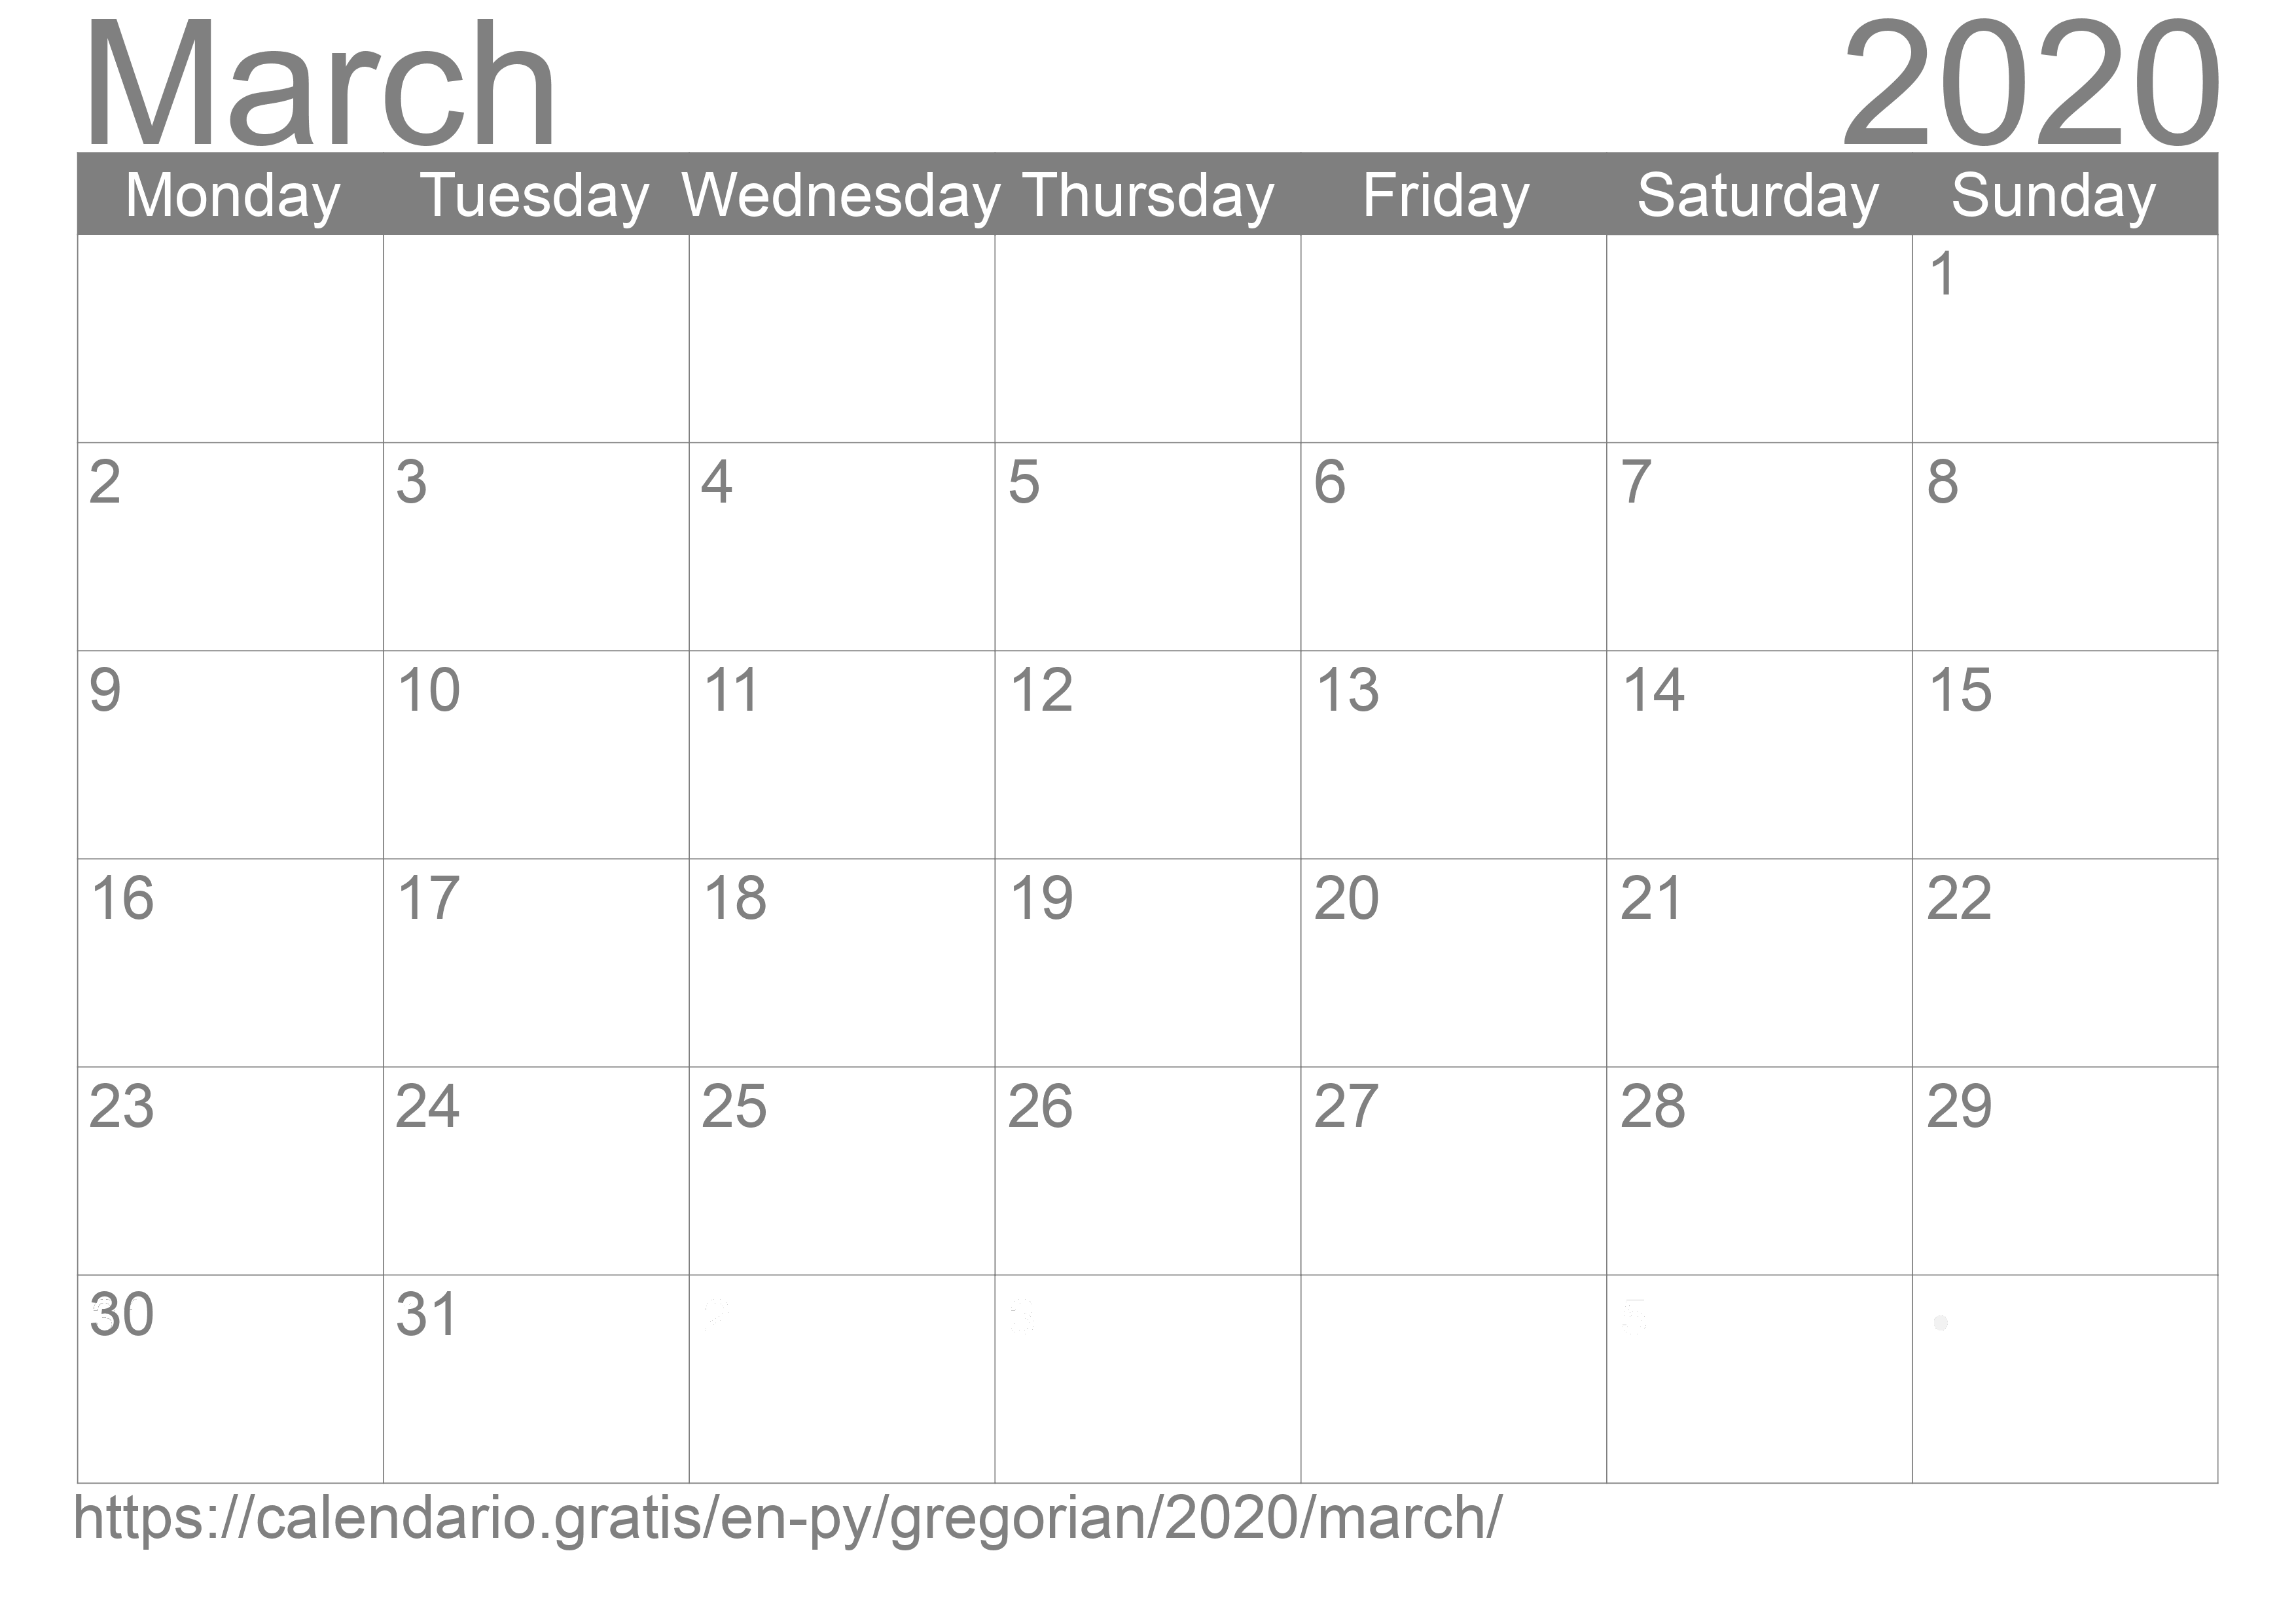 Calendar March 2020 to print